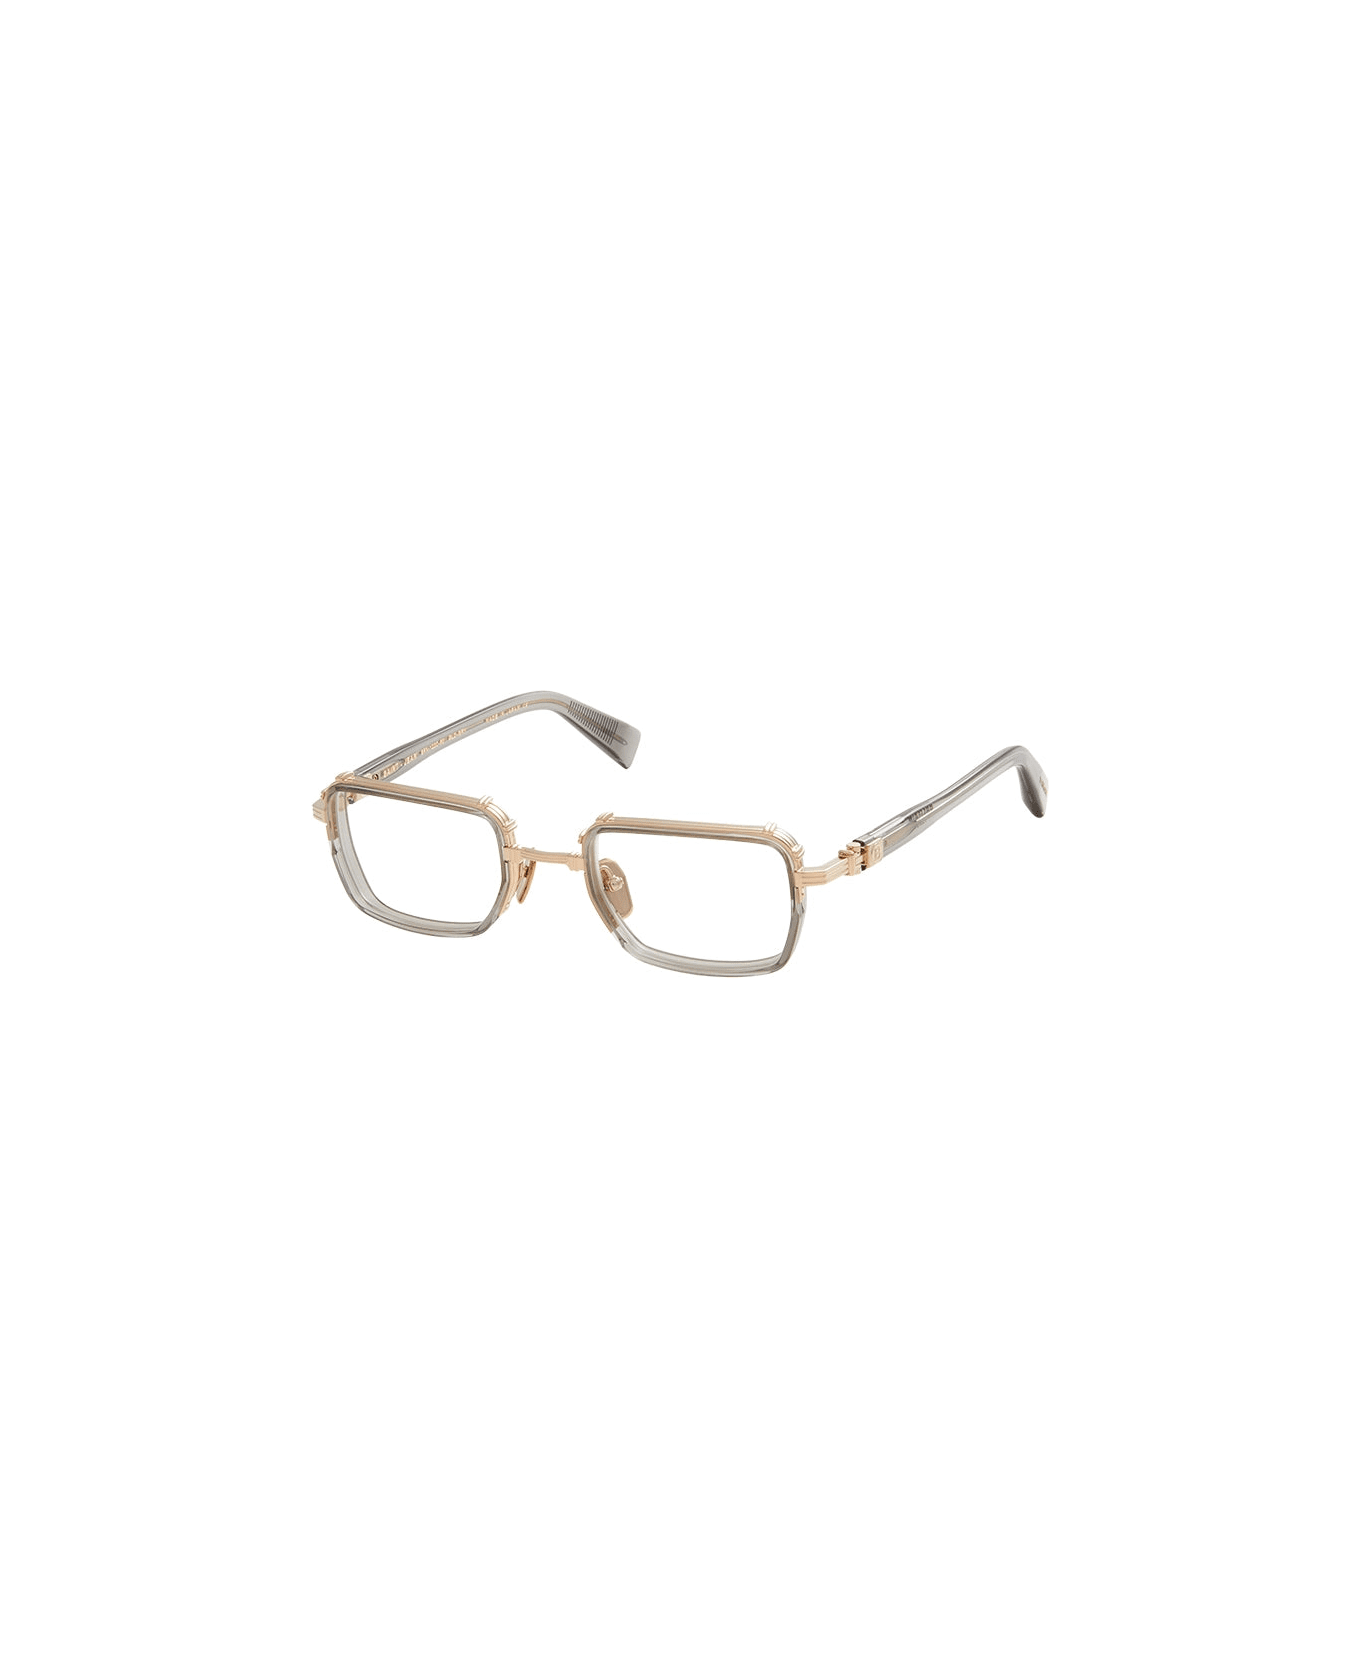 Balmain Saint Jean - Gold / Grey Eyeglasses Glasses - gold, grey